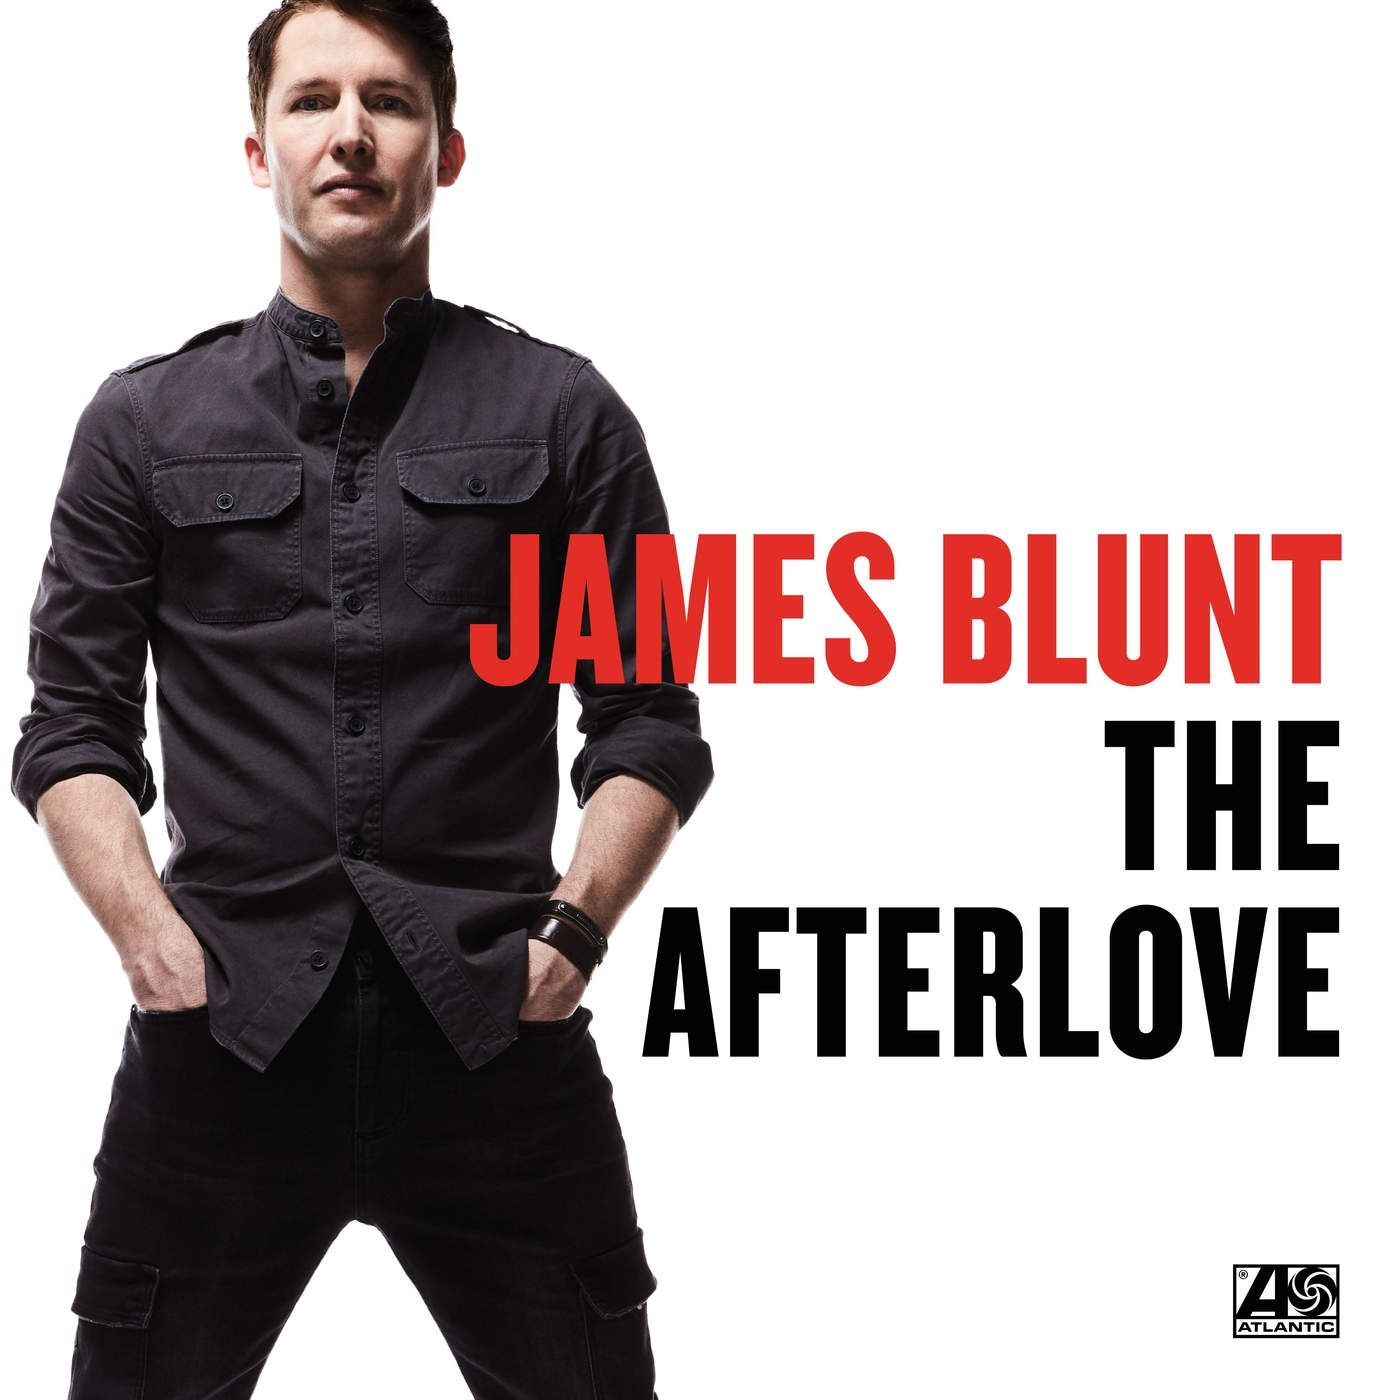 Imagem do álbum The Afterlove (Extended Version) do(a) artista James Blunt